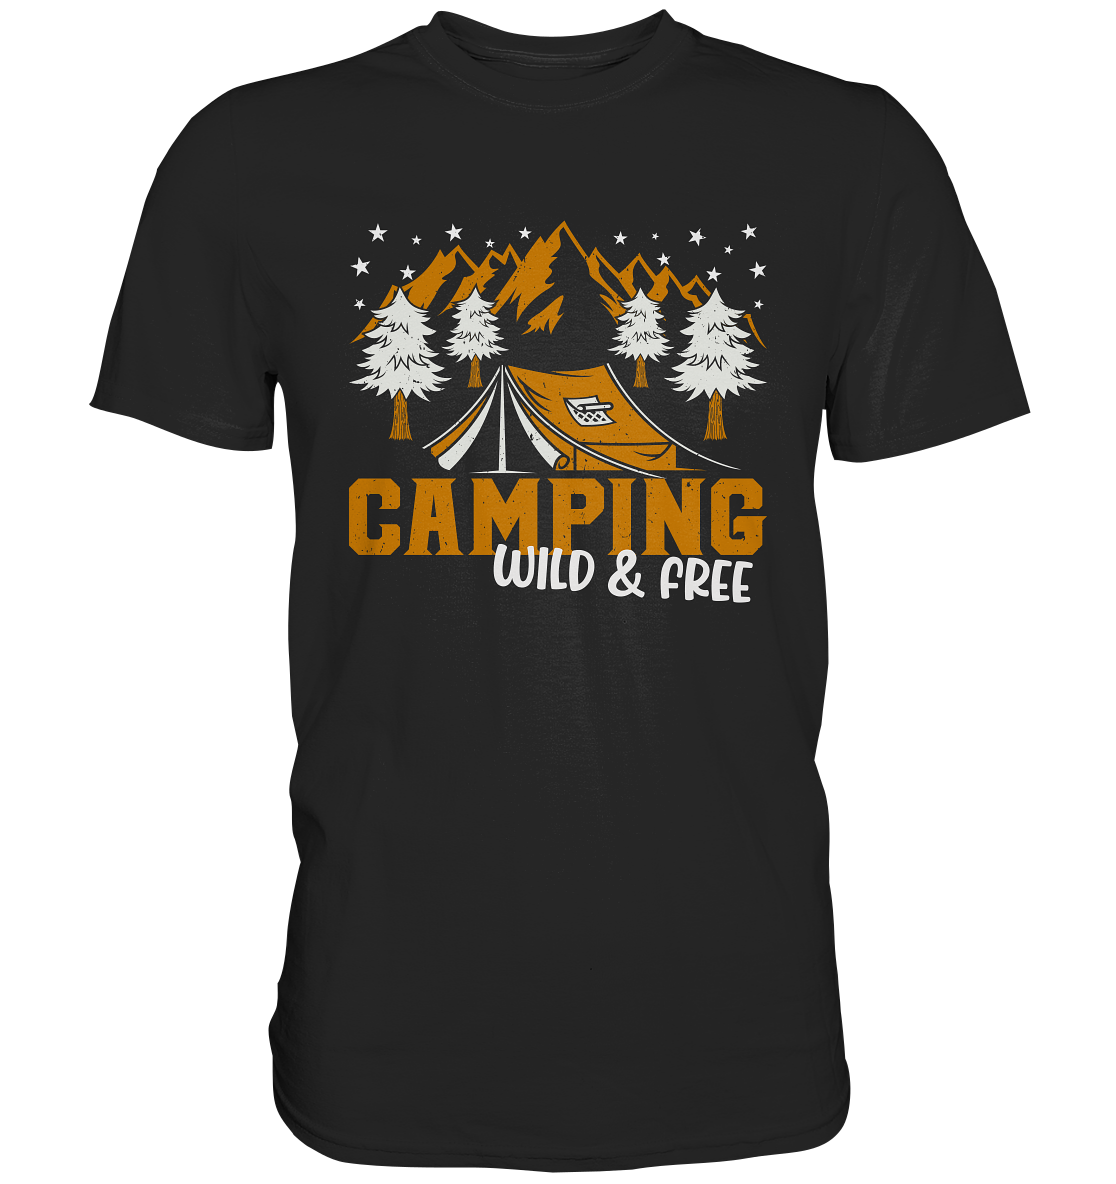 Camping wild & free. Outdoor - Premium Shirt